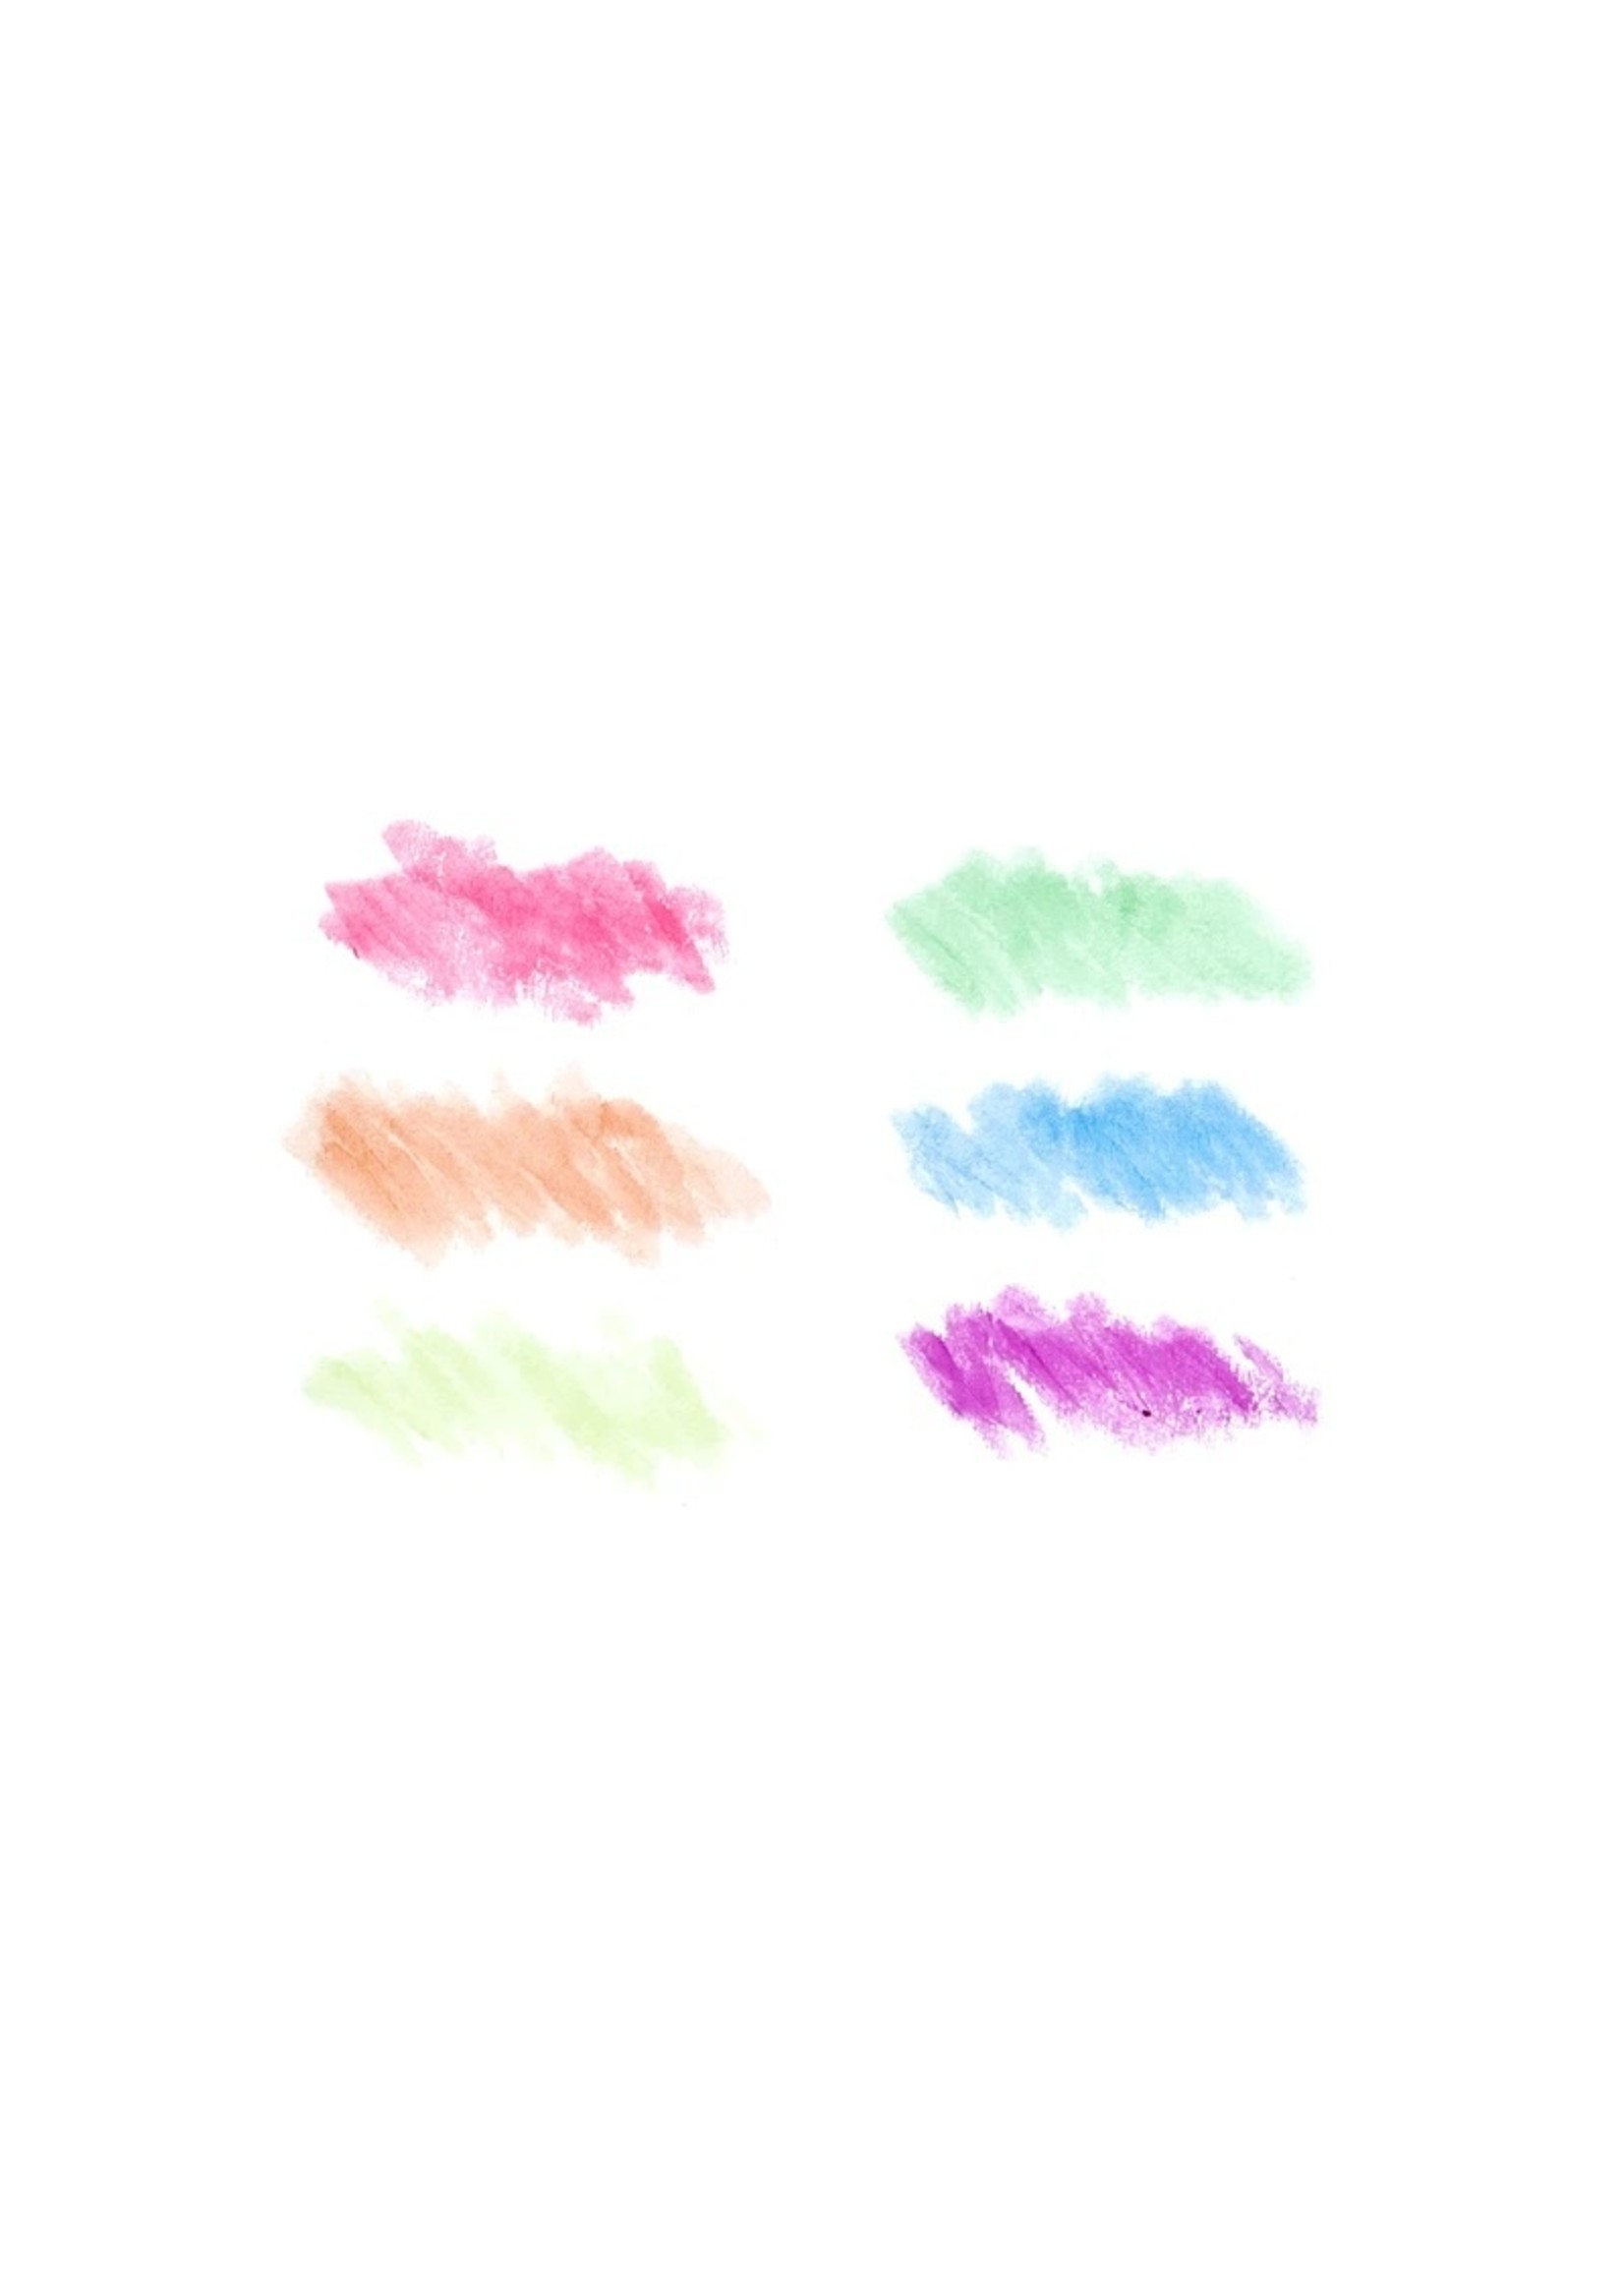 Ooly Chunkies Paint Sticks Neon-6pk/12